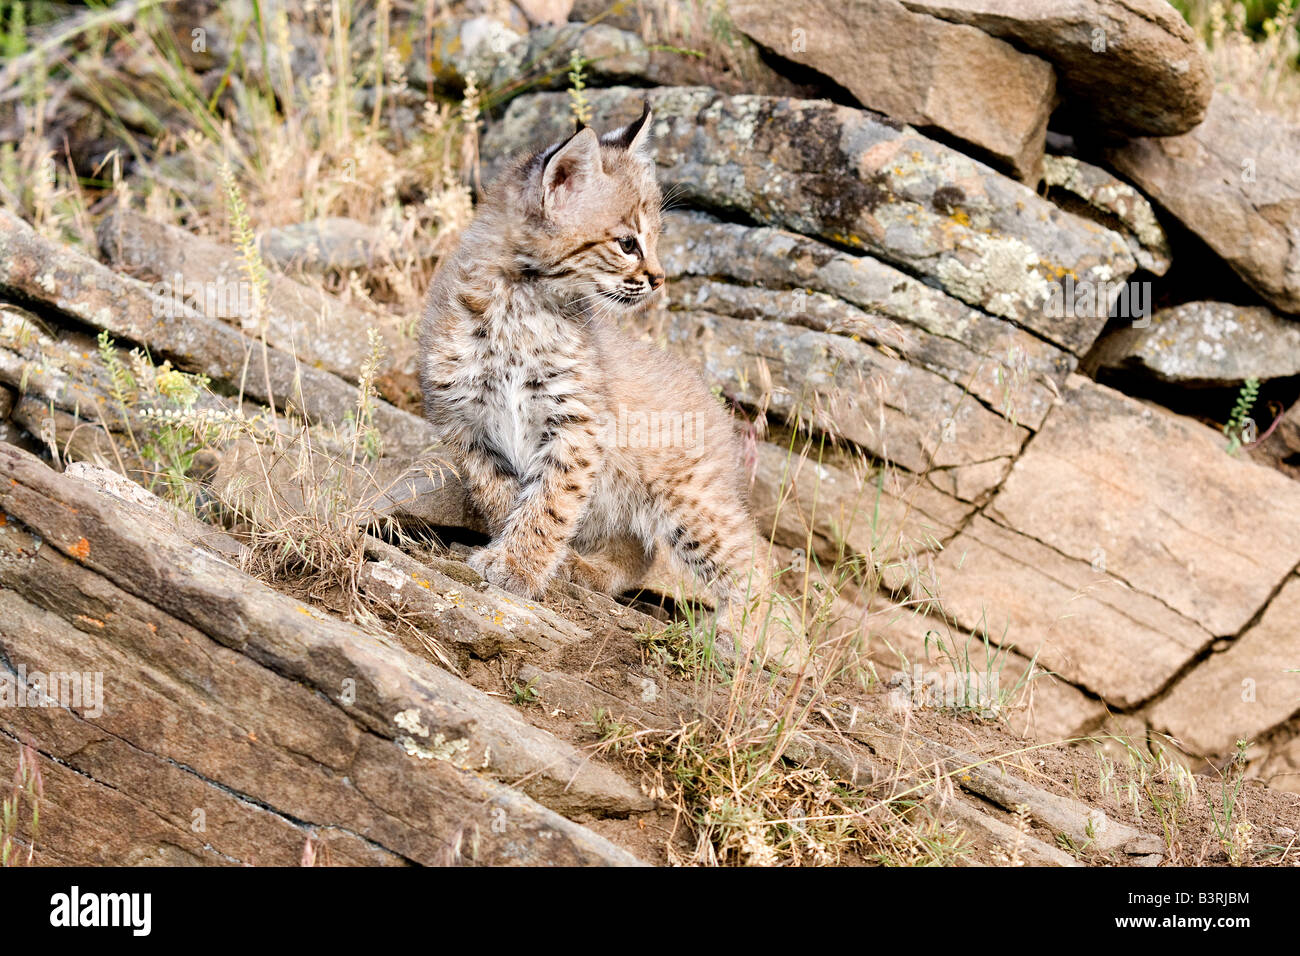 Bobcat kitten on a rocky ledge. Stock Photo